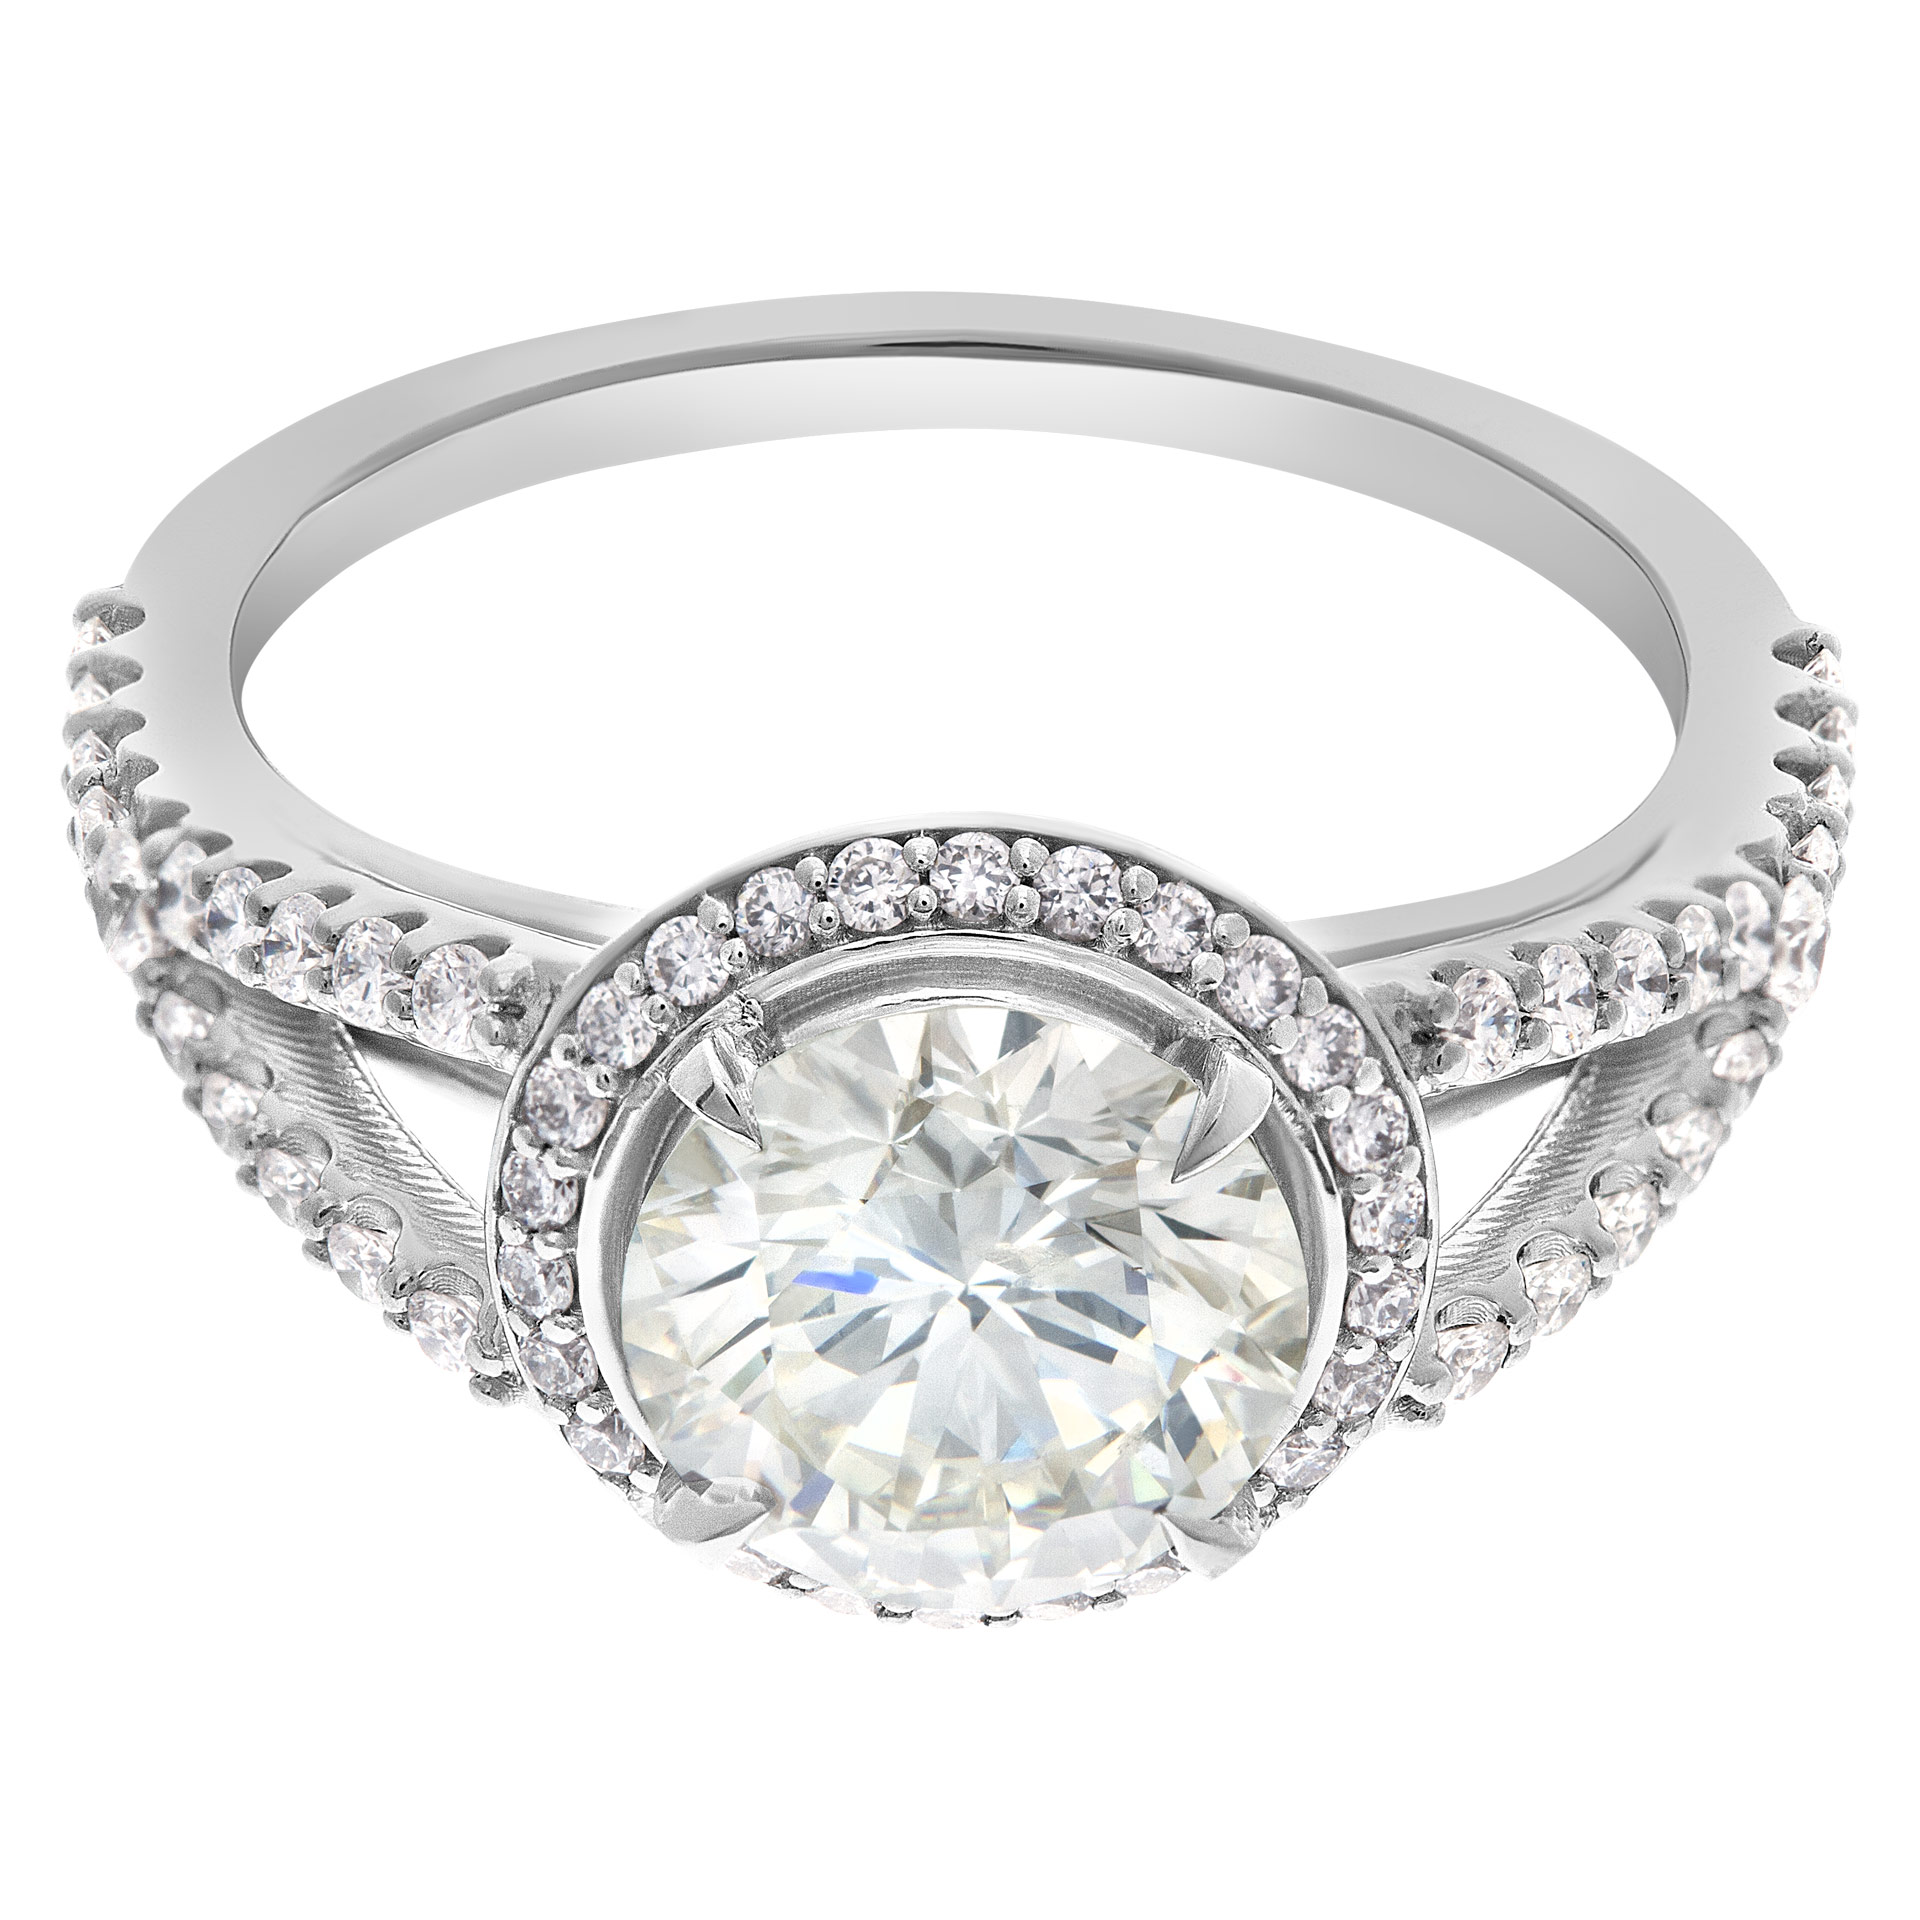 GIA cerified round brilliant cut diamond 1.81 carat (J color, SI2 clarity, Excellent symmetry) ring image 3